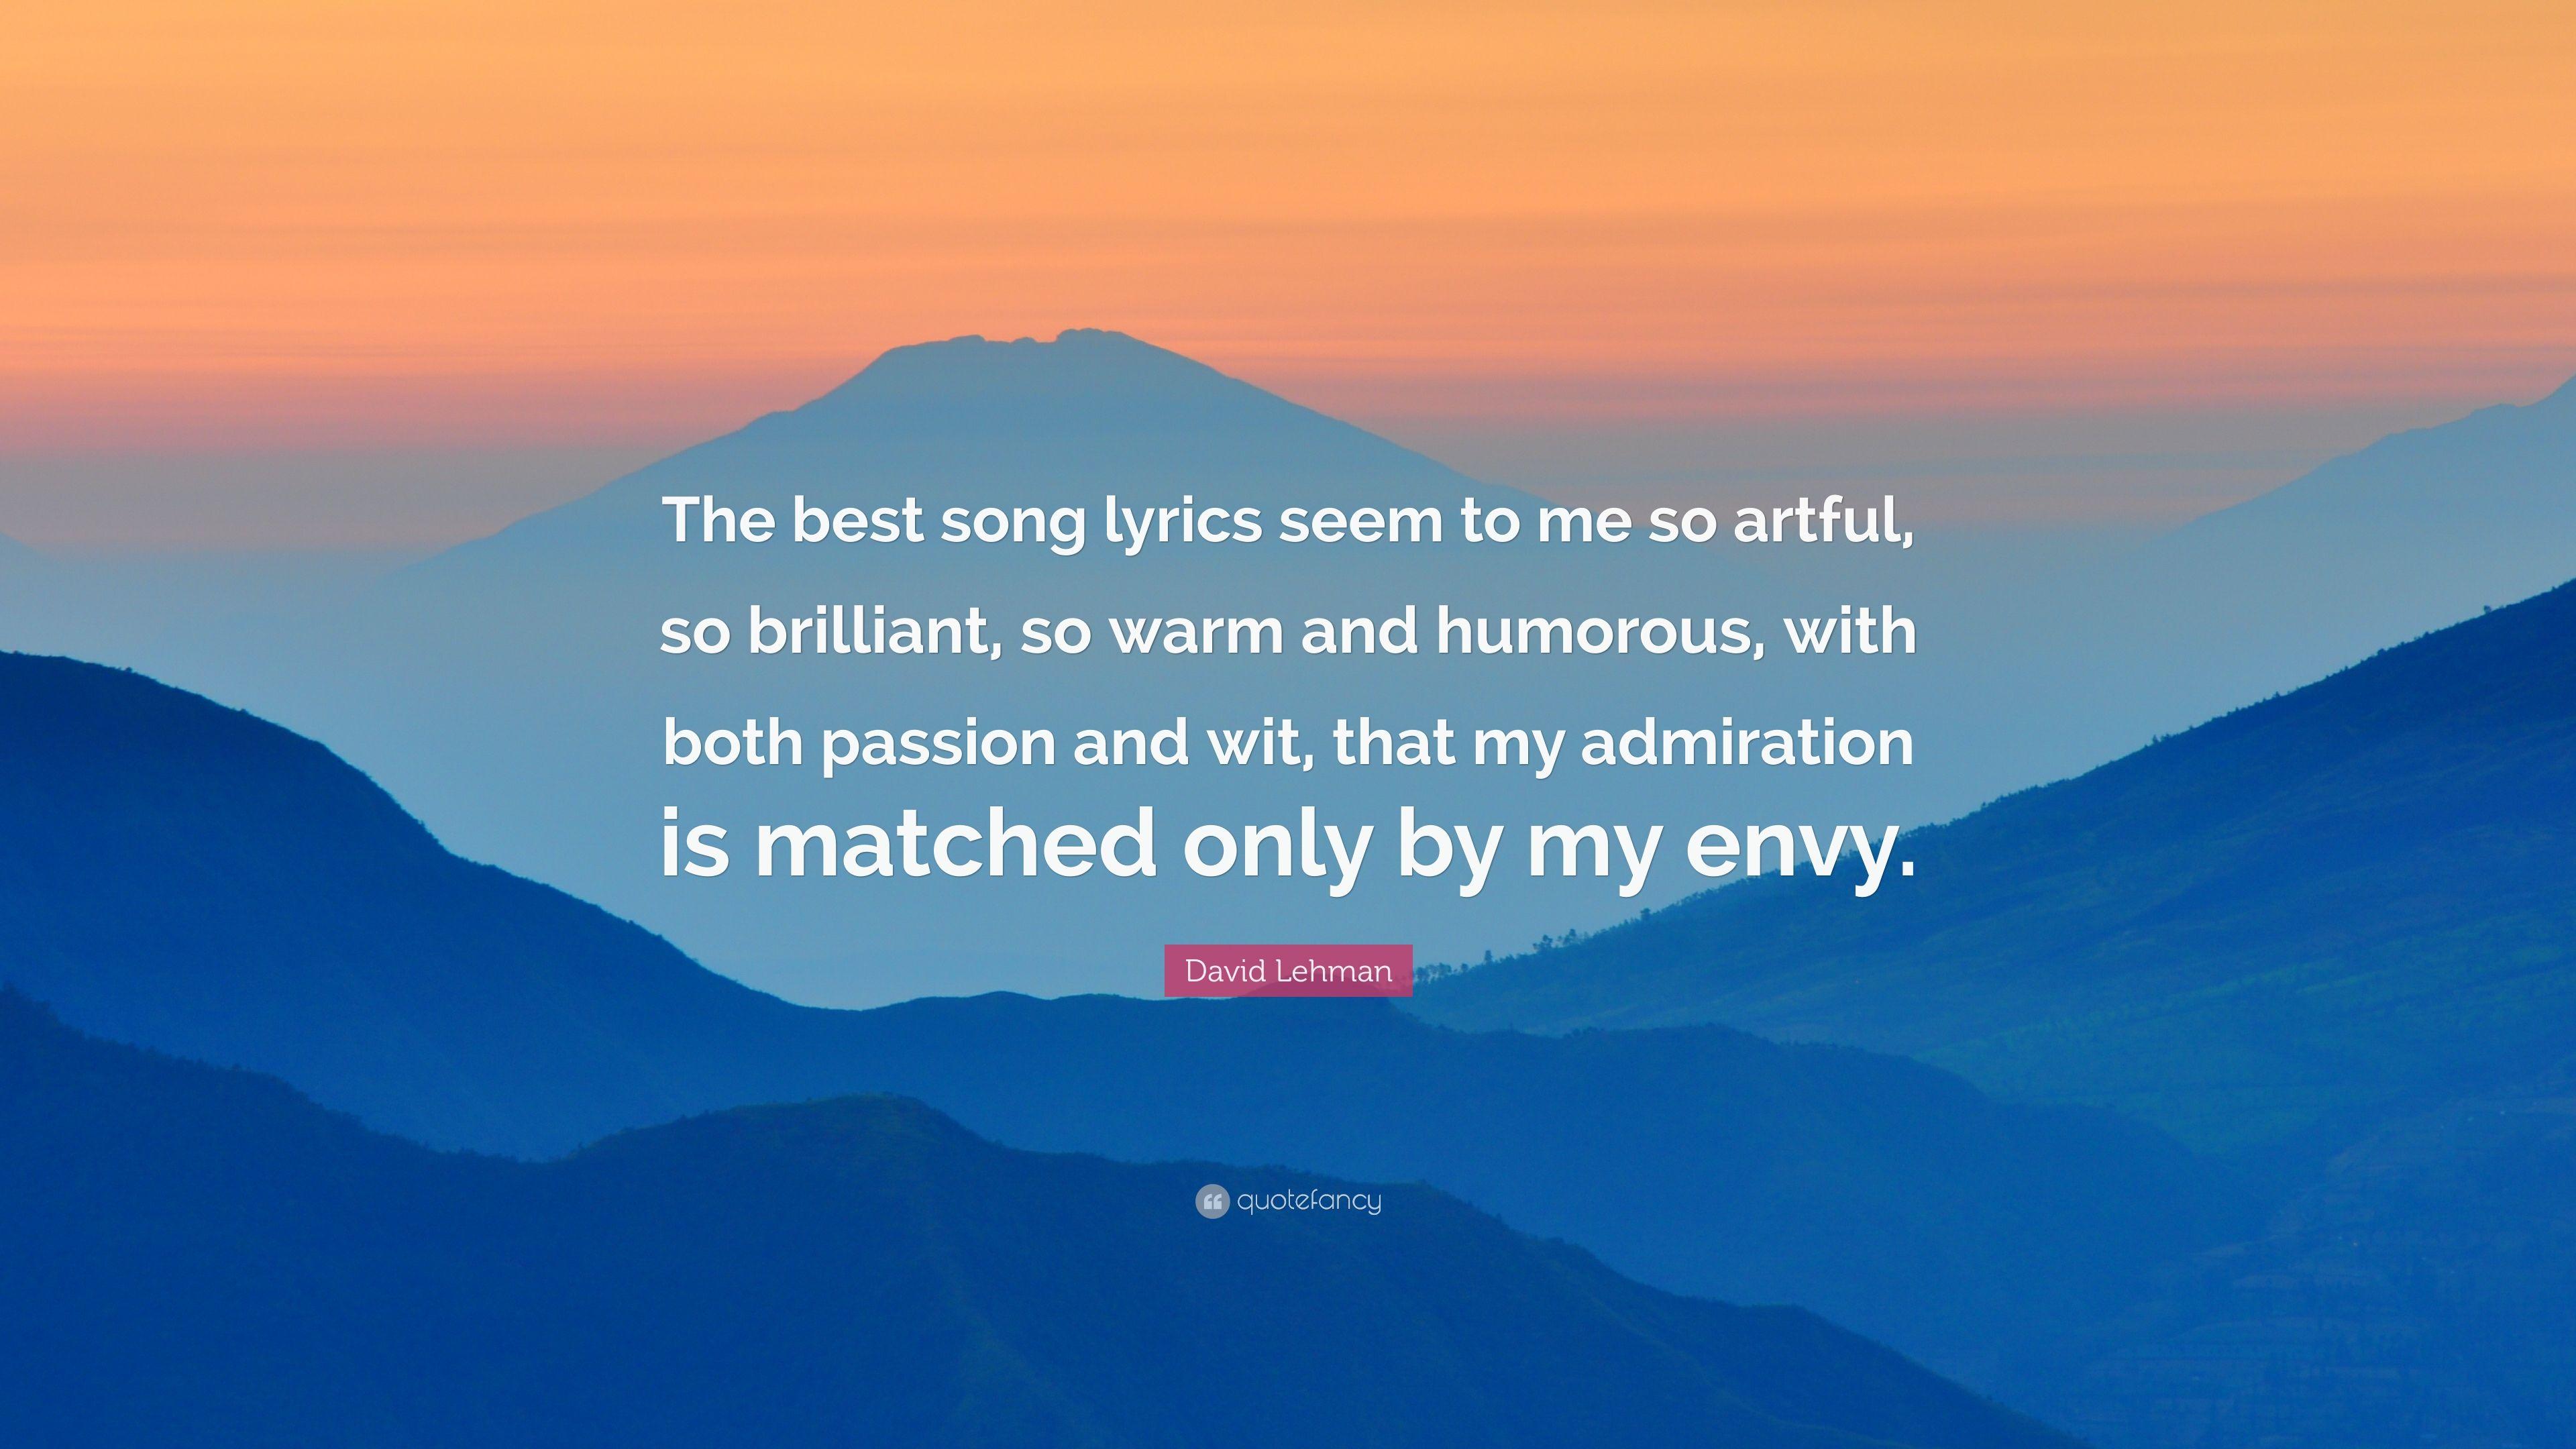 David Lehman Quote: “The best song lyrics seem to me so artful, so